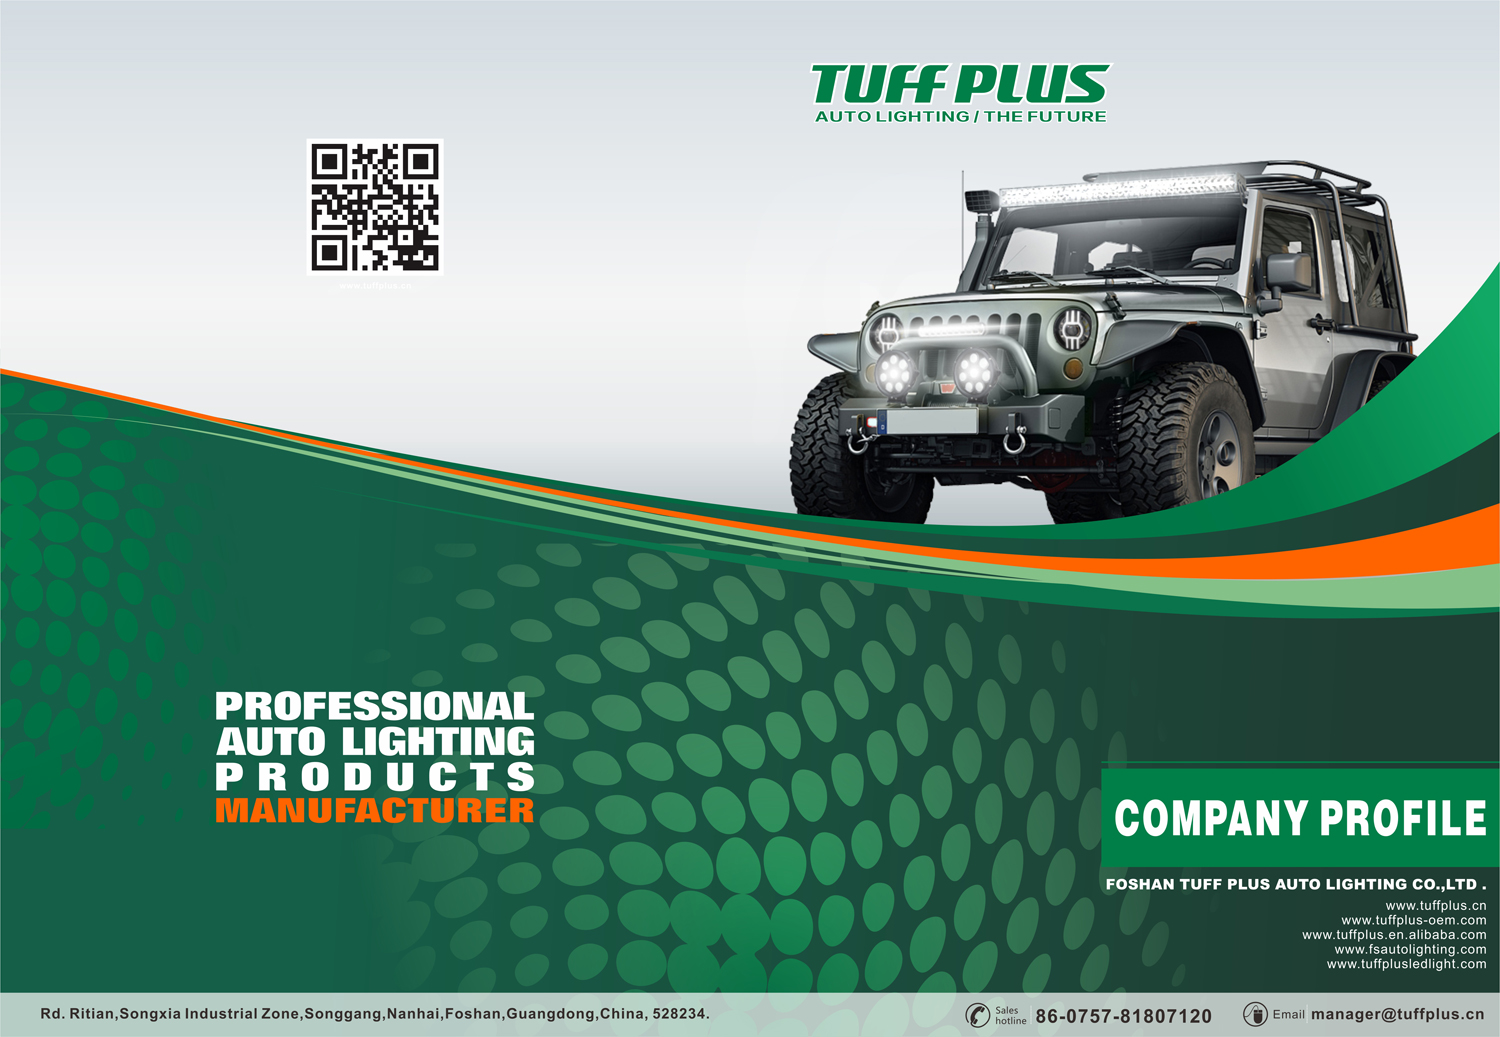 Tuffplus Company Profile